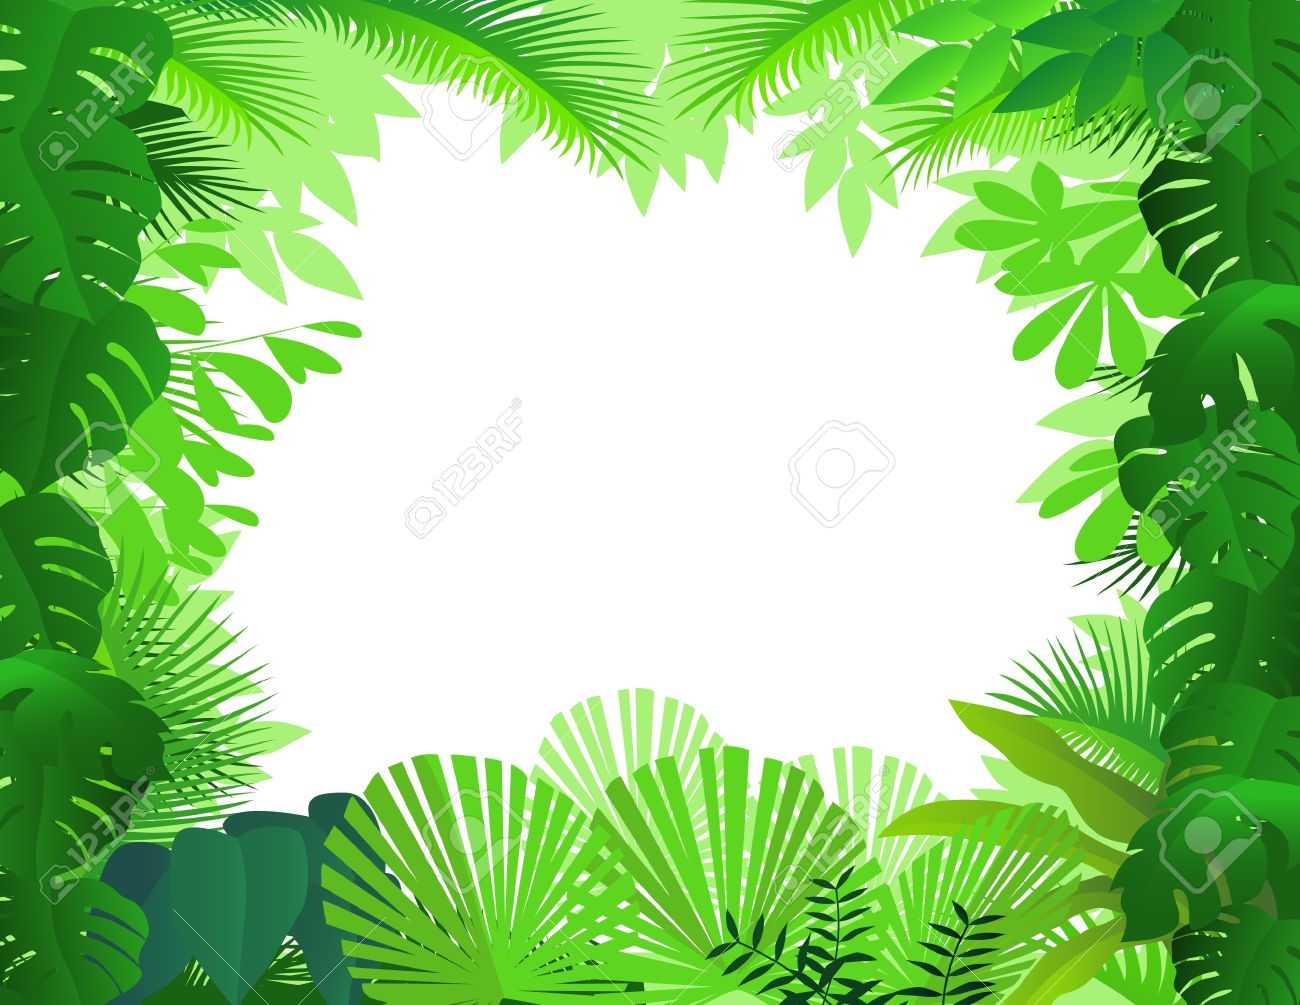 Jungle background clipart